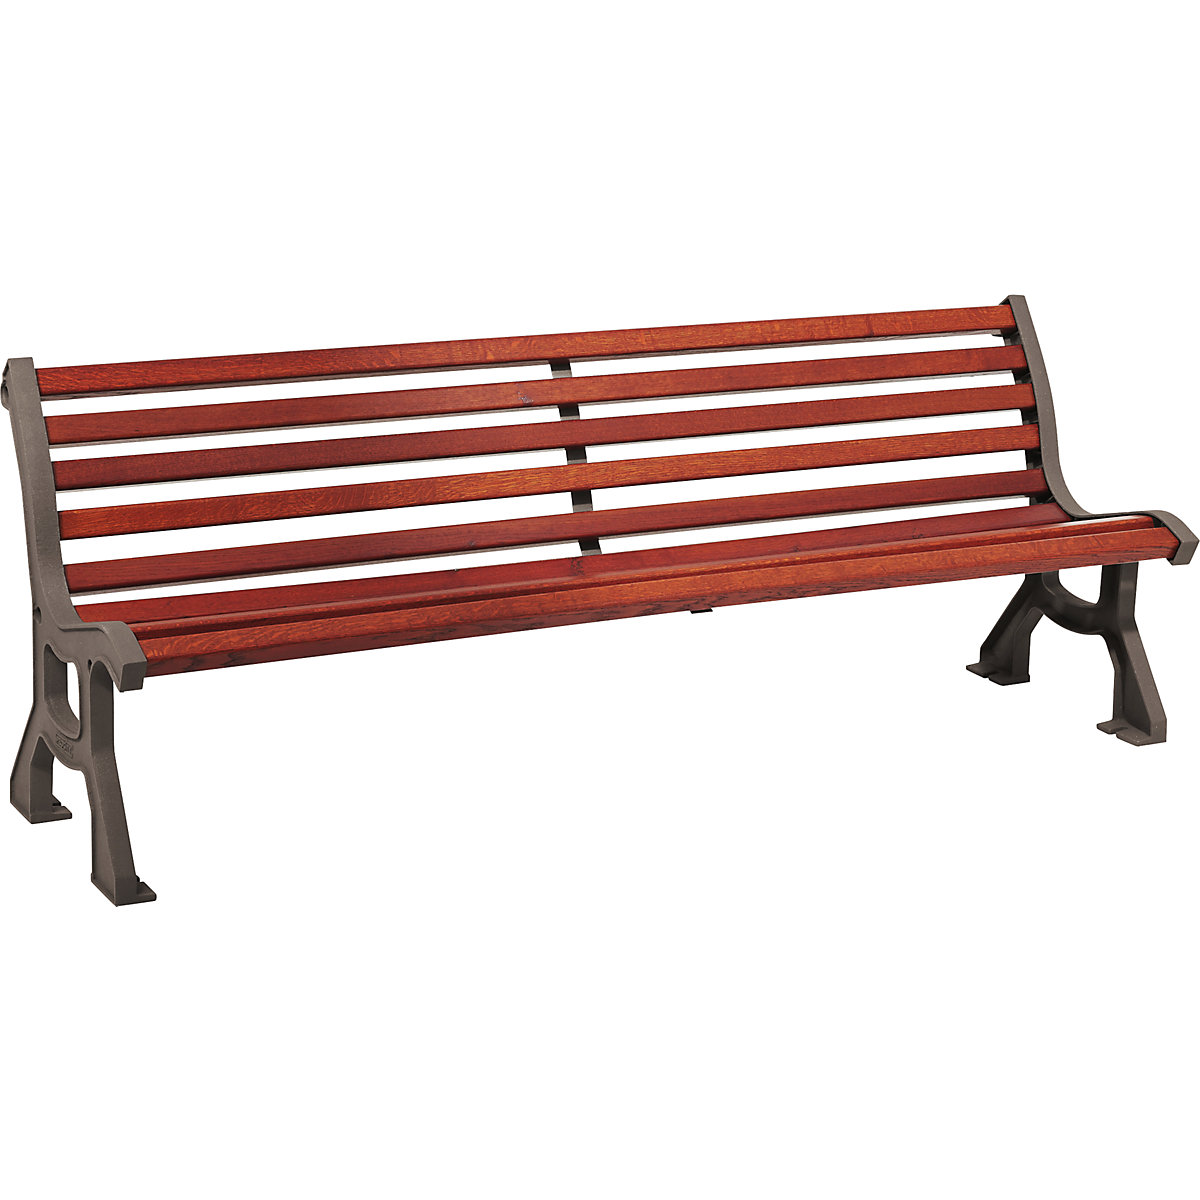 Drvena klupa za sjedenje LUBLIN – PROCITY, dubina sjedala 385 mm, metalik, mahagonij-2